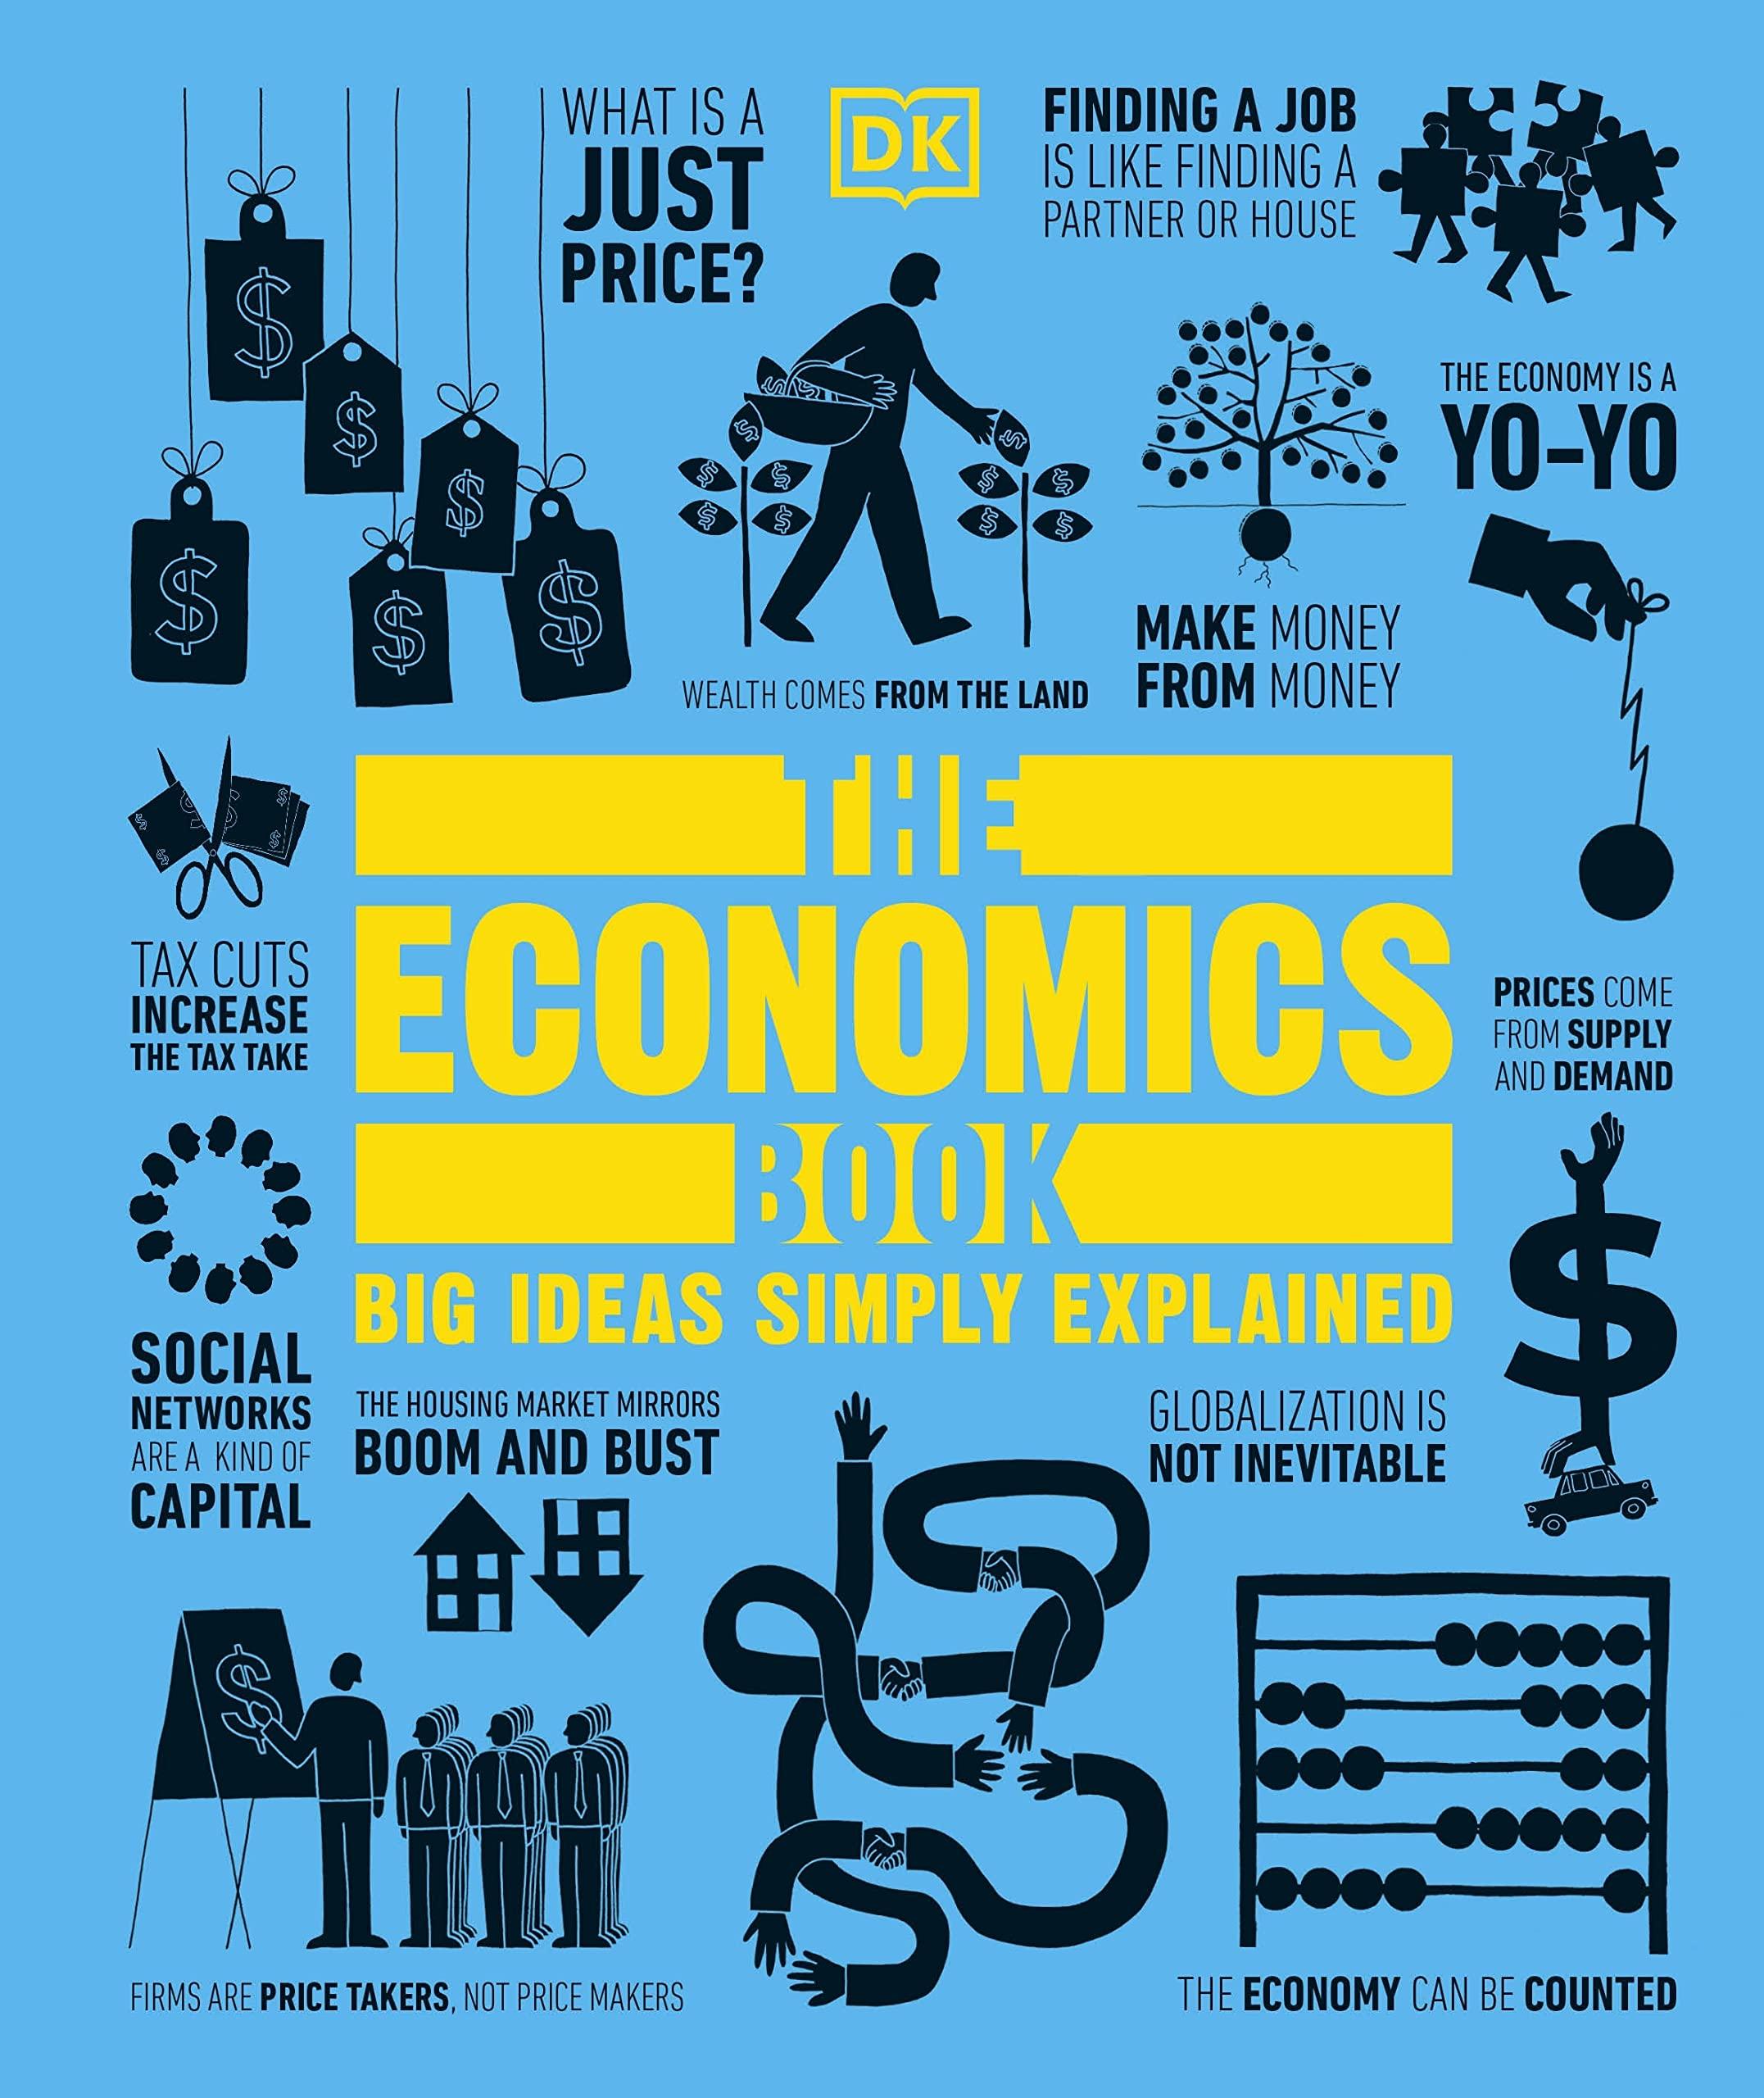 Business & Economics